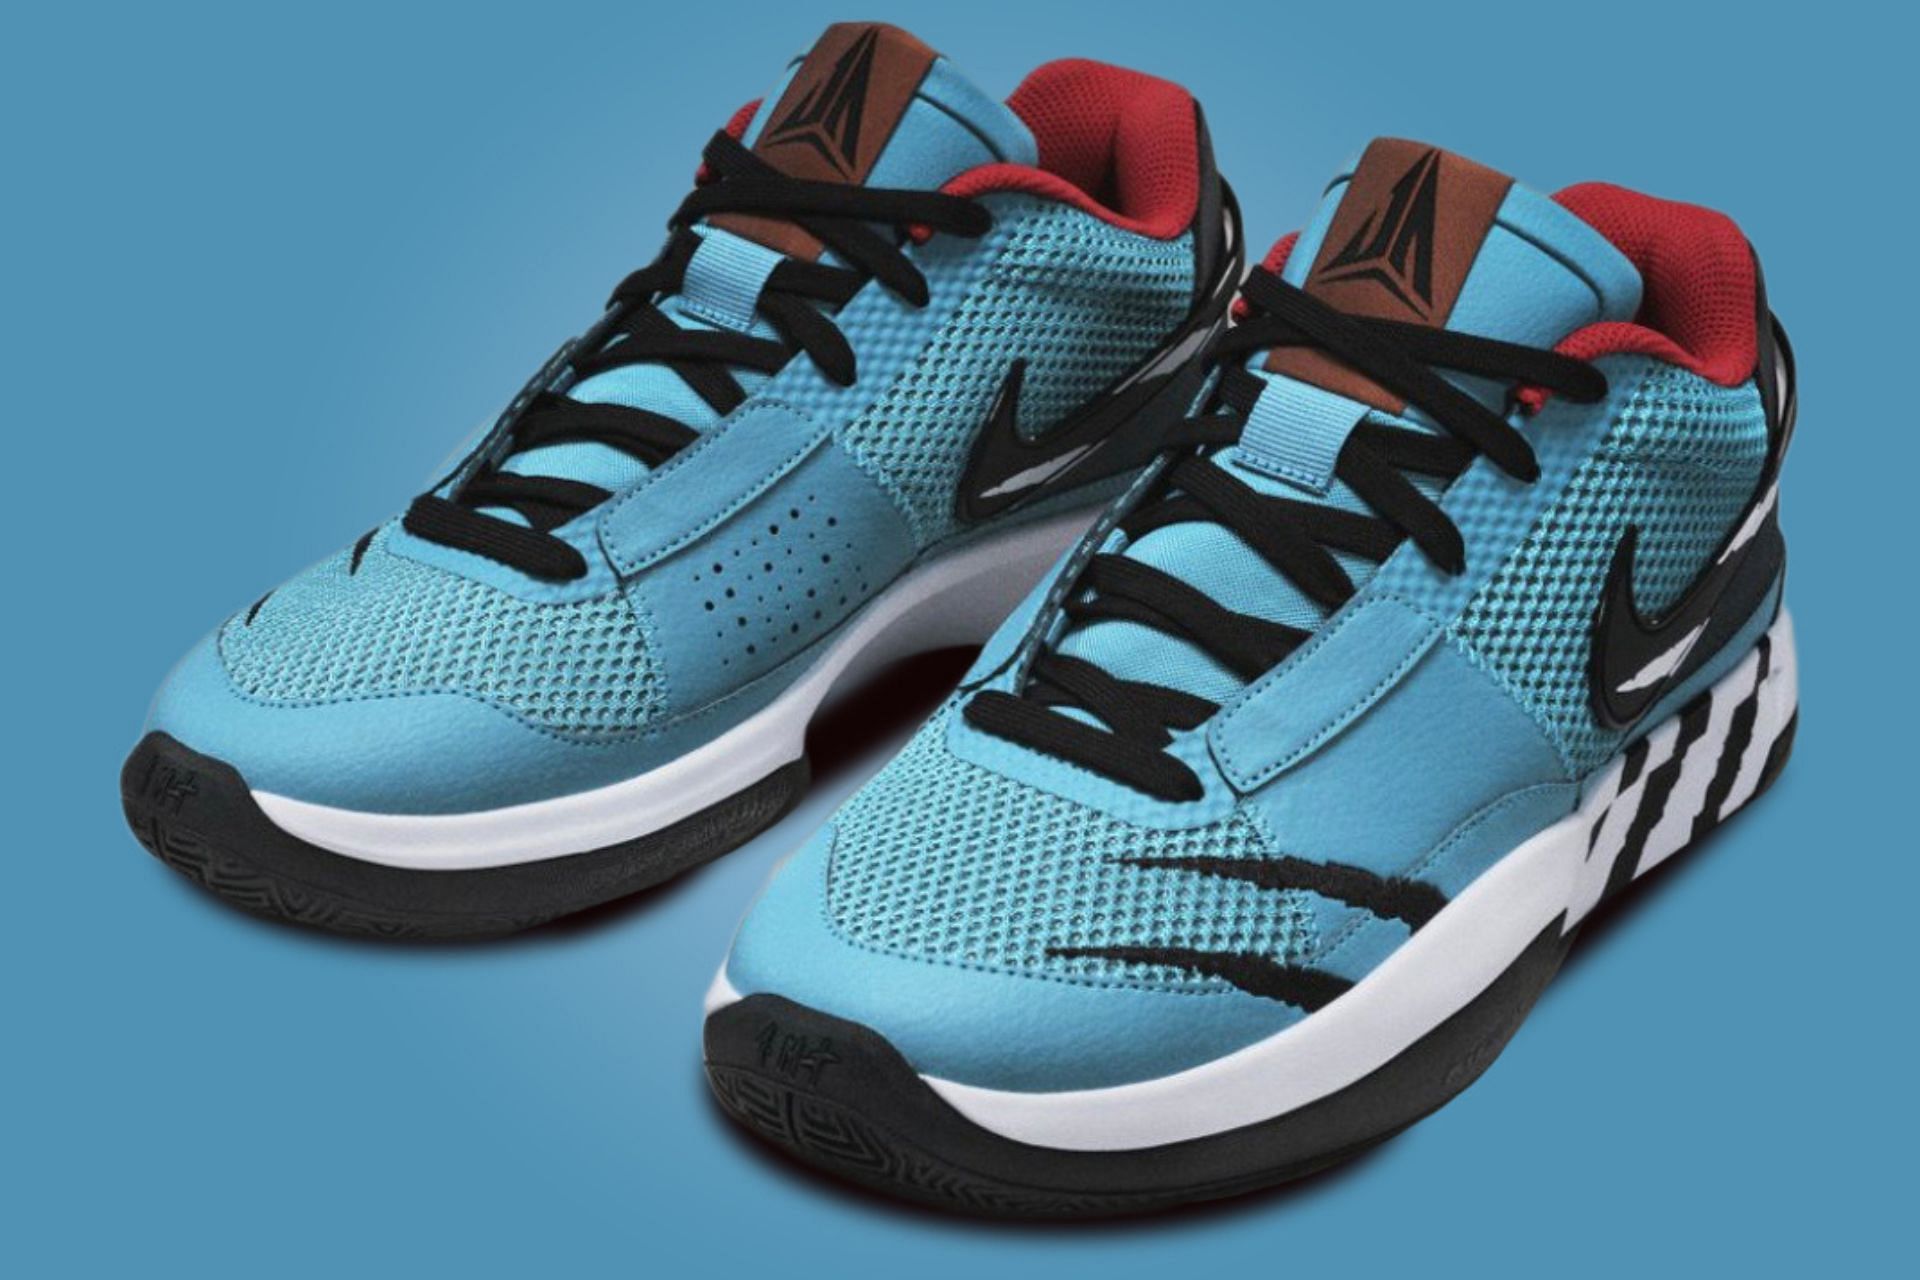 Take a closer look at the upcoming Nike Ja 1 sneakers (Image via Nike)